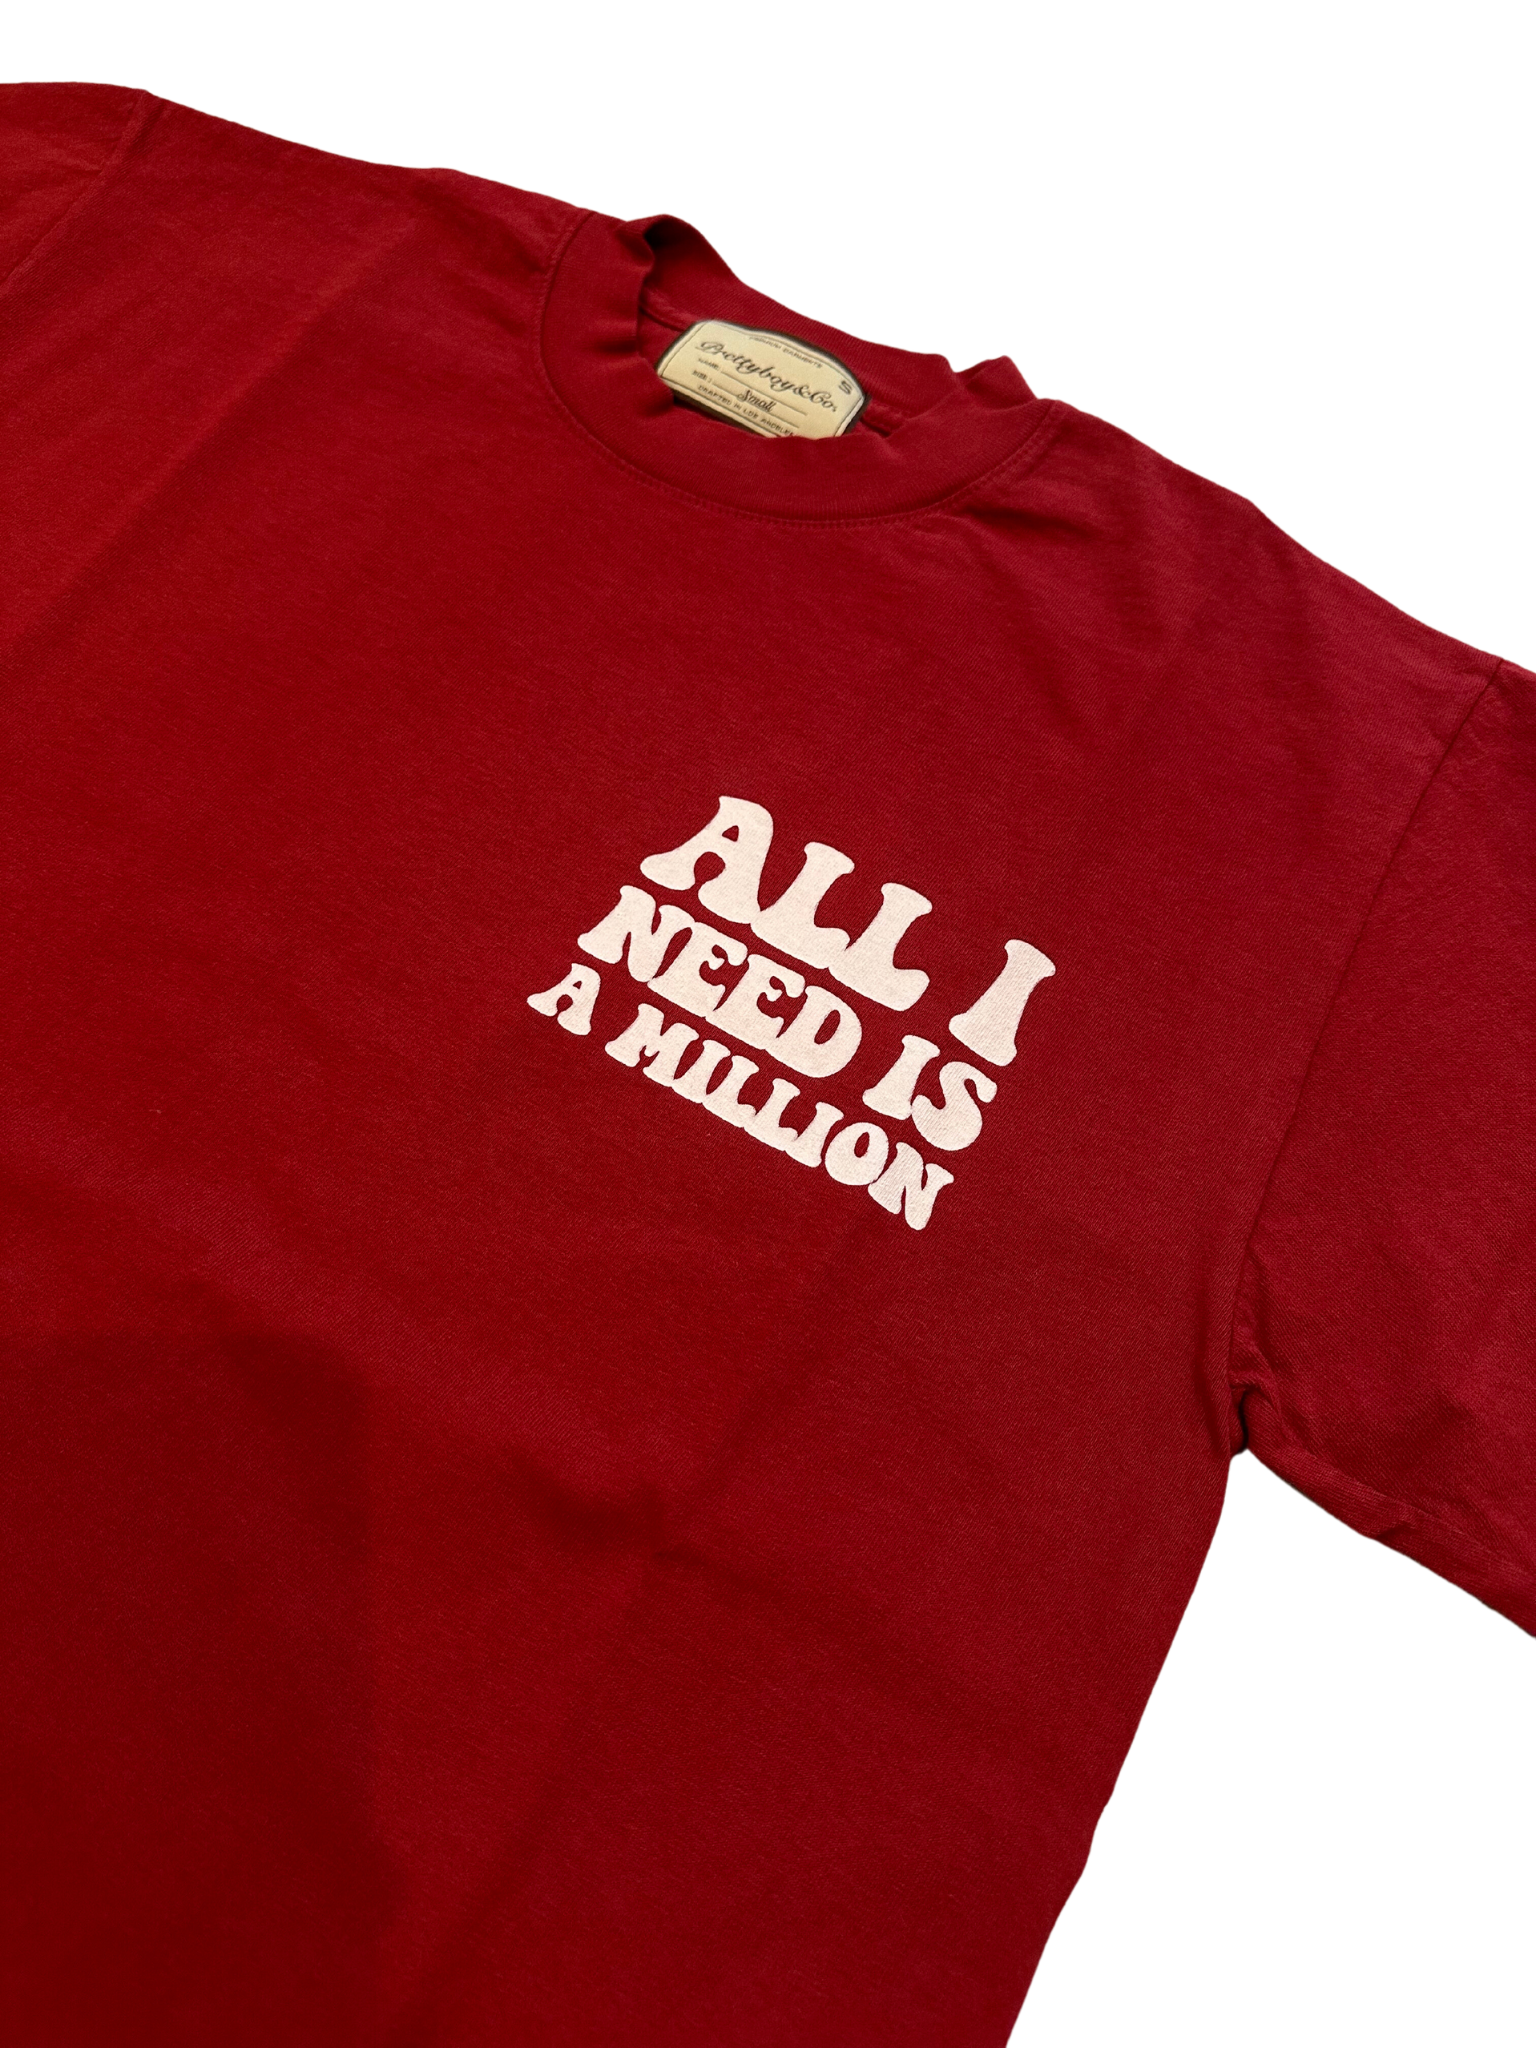 Red "A Milli" T-Shirt (QUICK STRIKE)